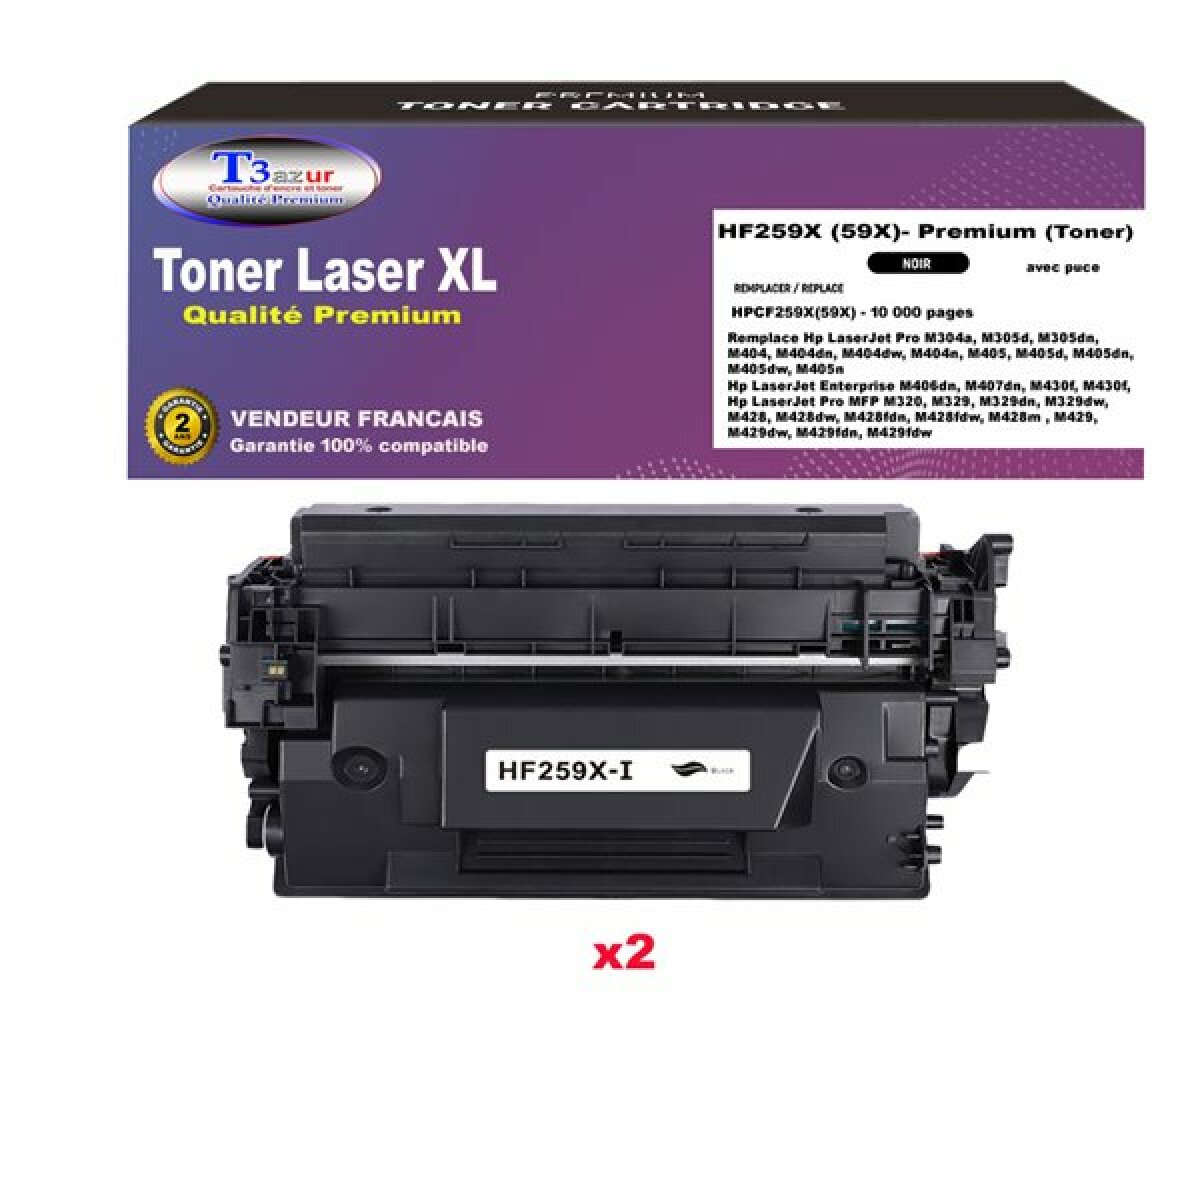 T3AZUR- Lot de 2 Toners compatibles avec HP LaserJet Pro MFP M428, M428dw, M428fdn, M428fdw, M428m remplace (59X) Noir